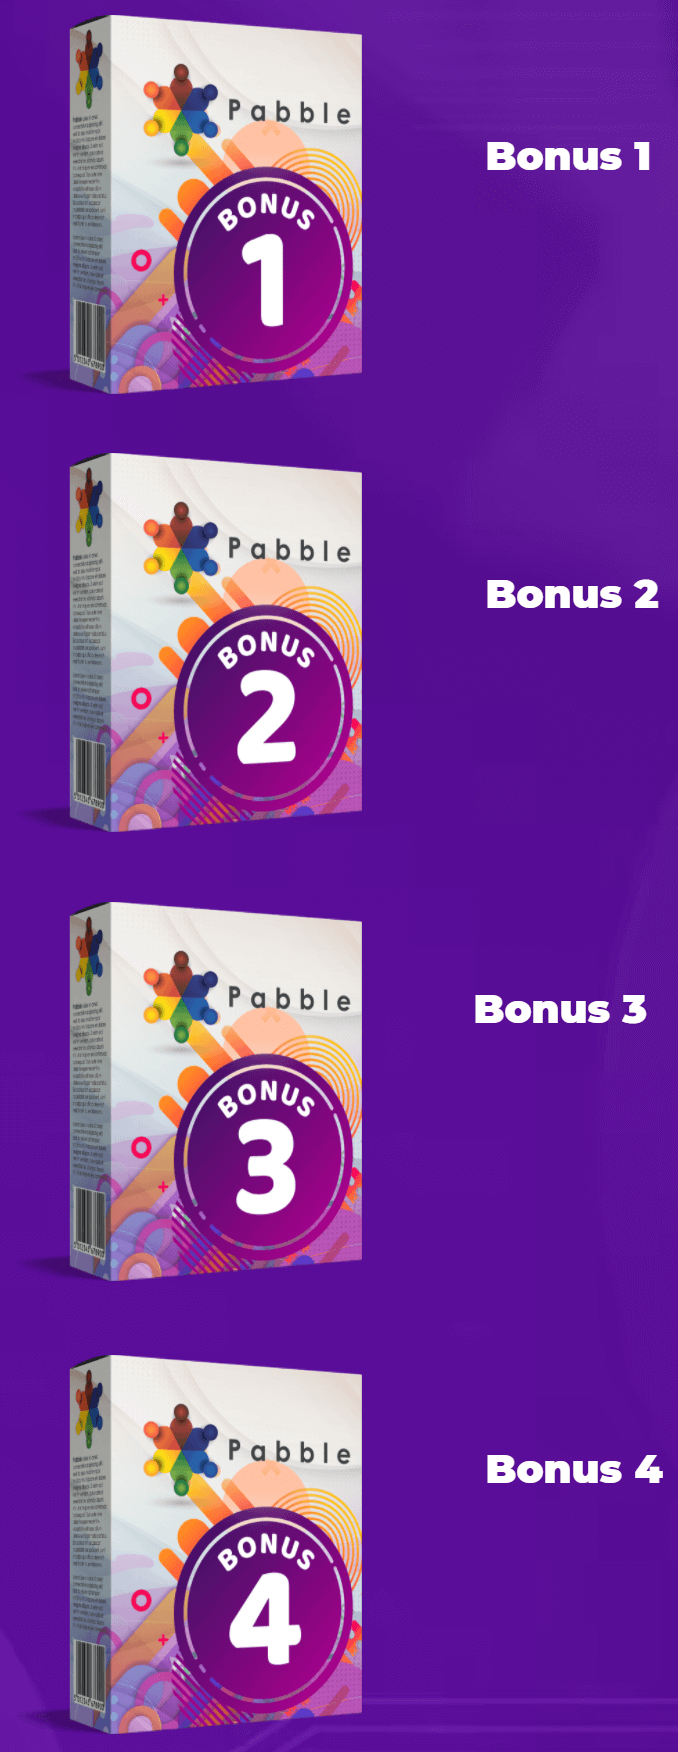 Pabble-bonus